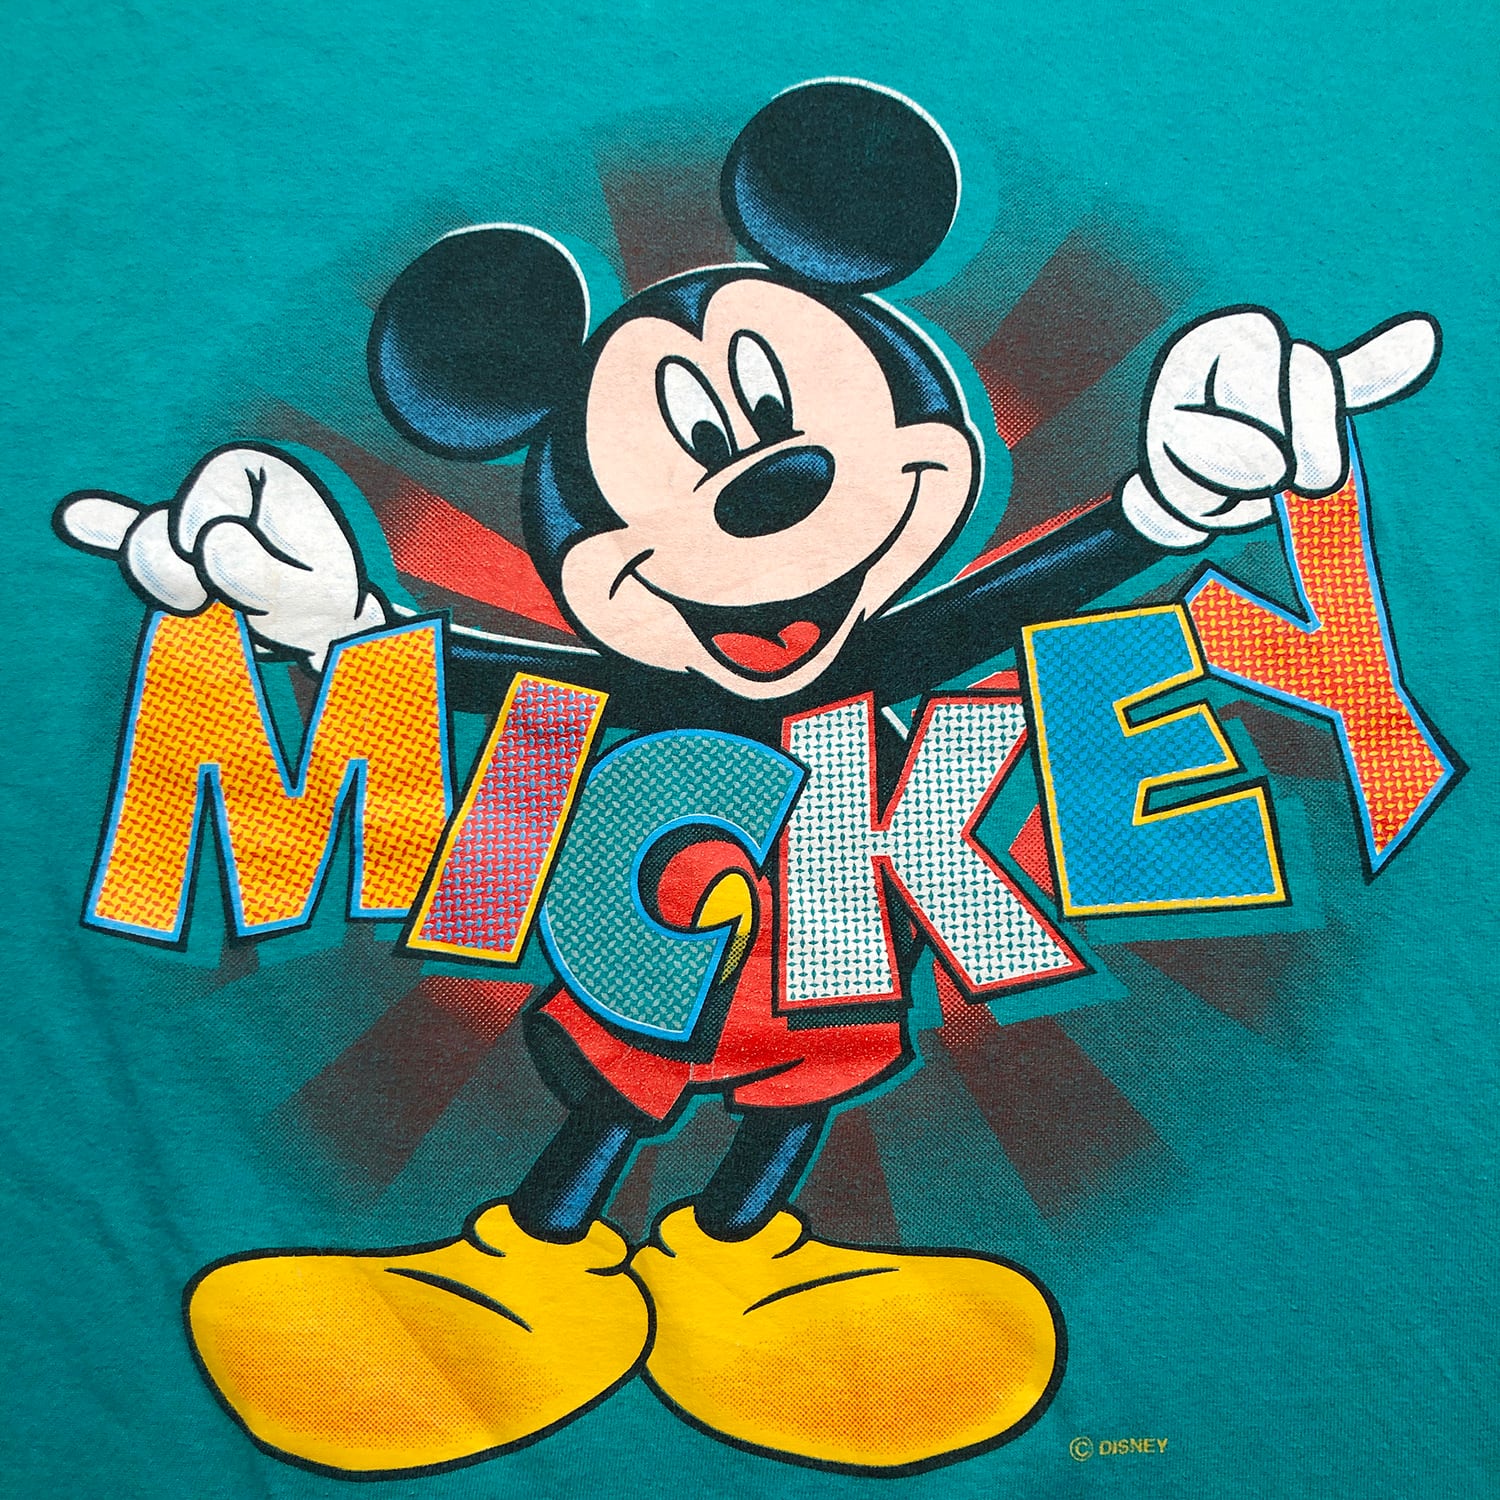 90S メキシコ製 ヴィンテージ ディズニー ミッキーマウス オールド Tシャツ メンズL Disney 青緑色 ディズニーランド 古着